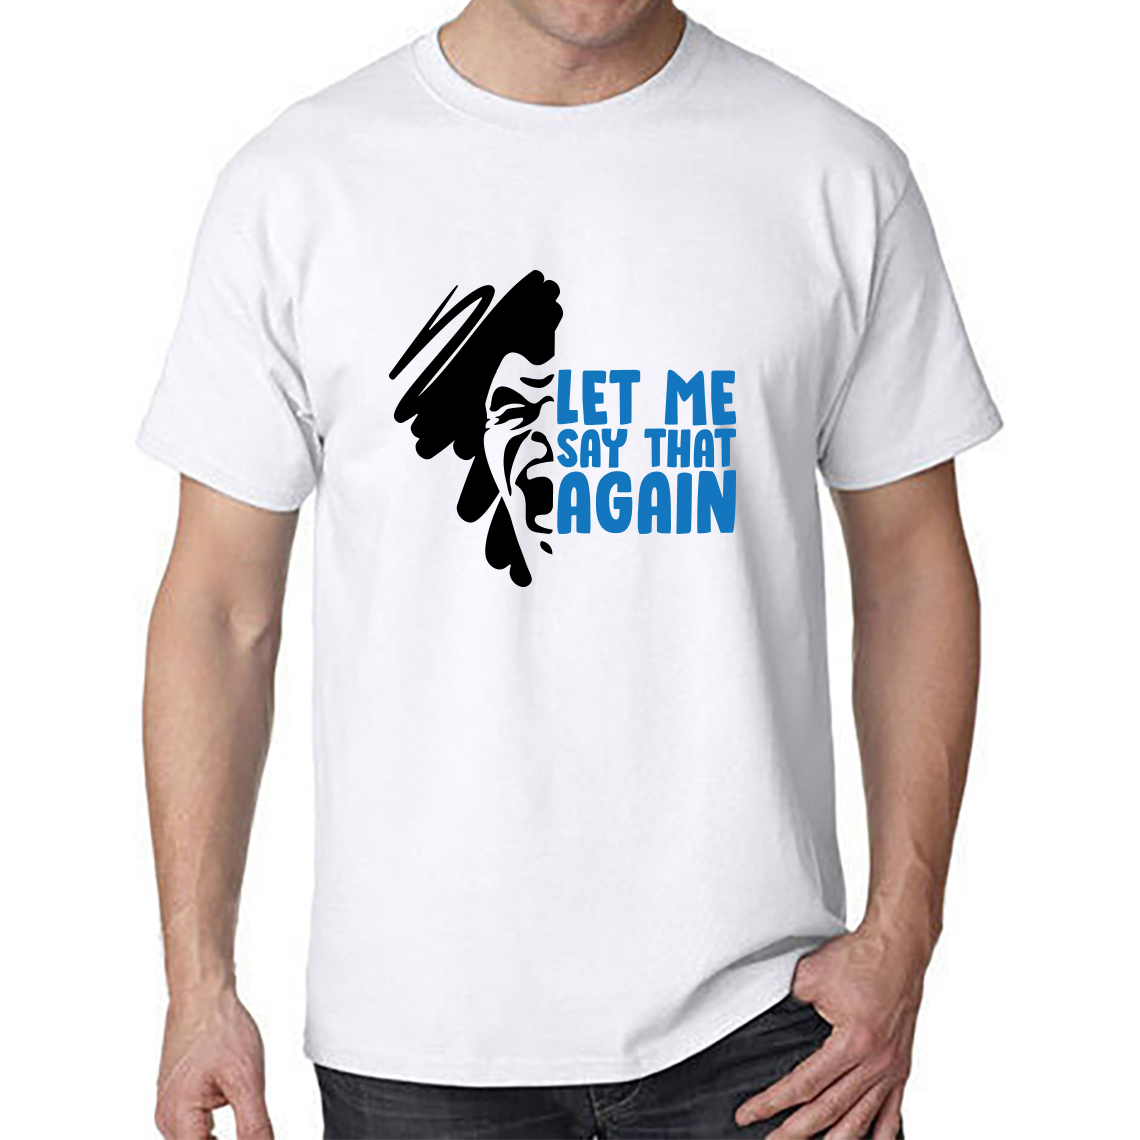 T shirt design LEt me say that agian